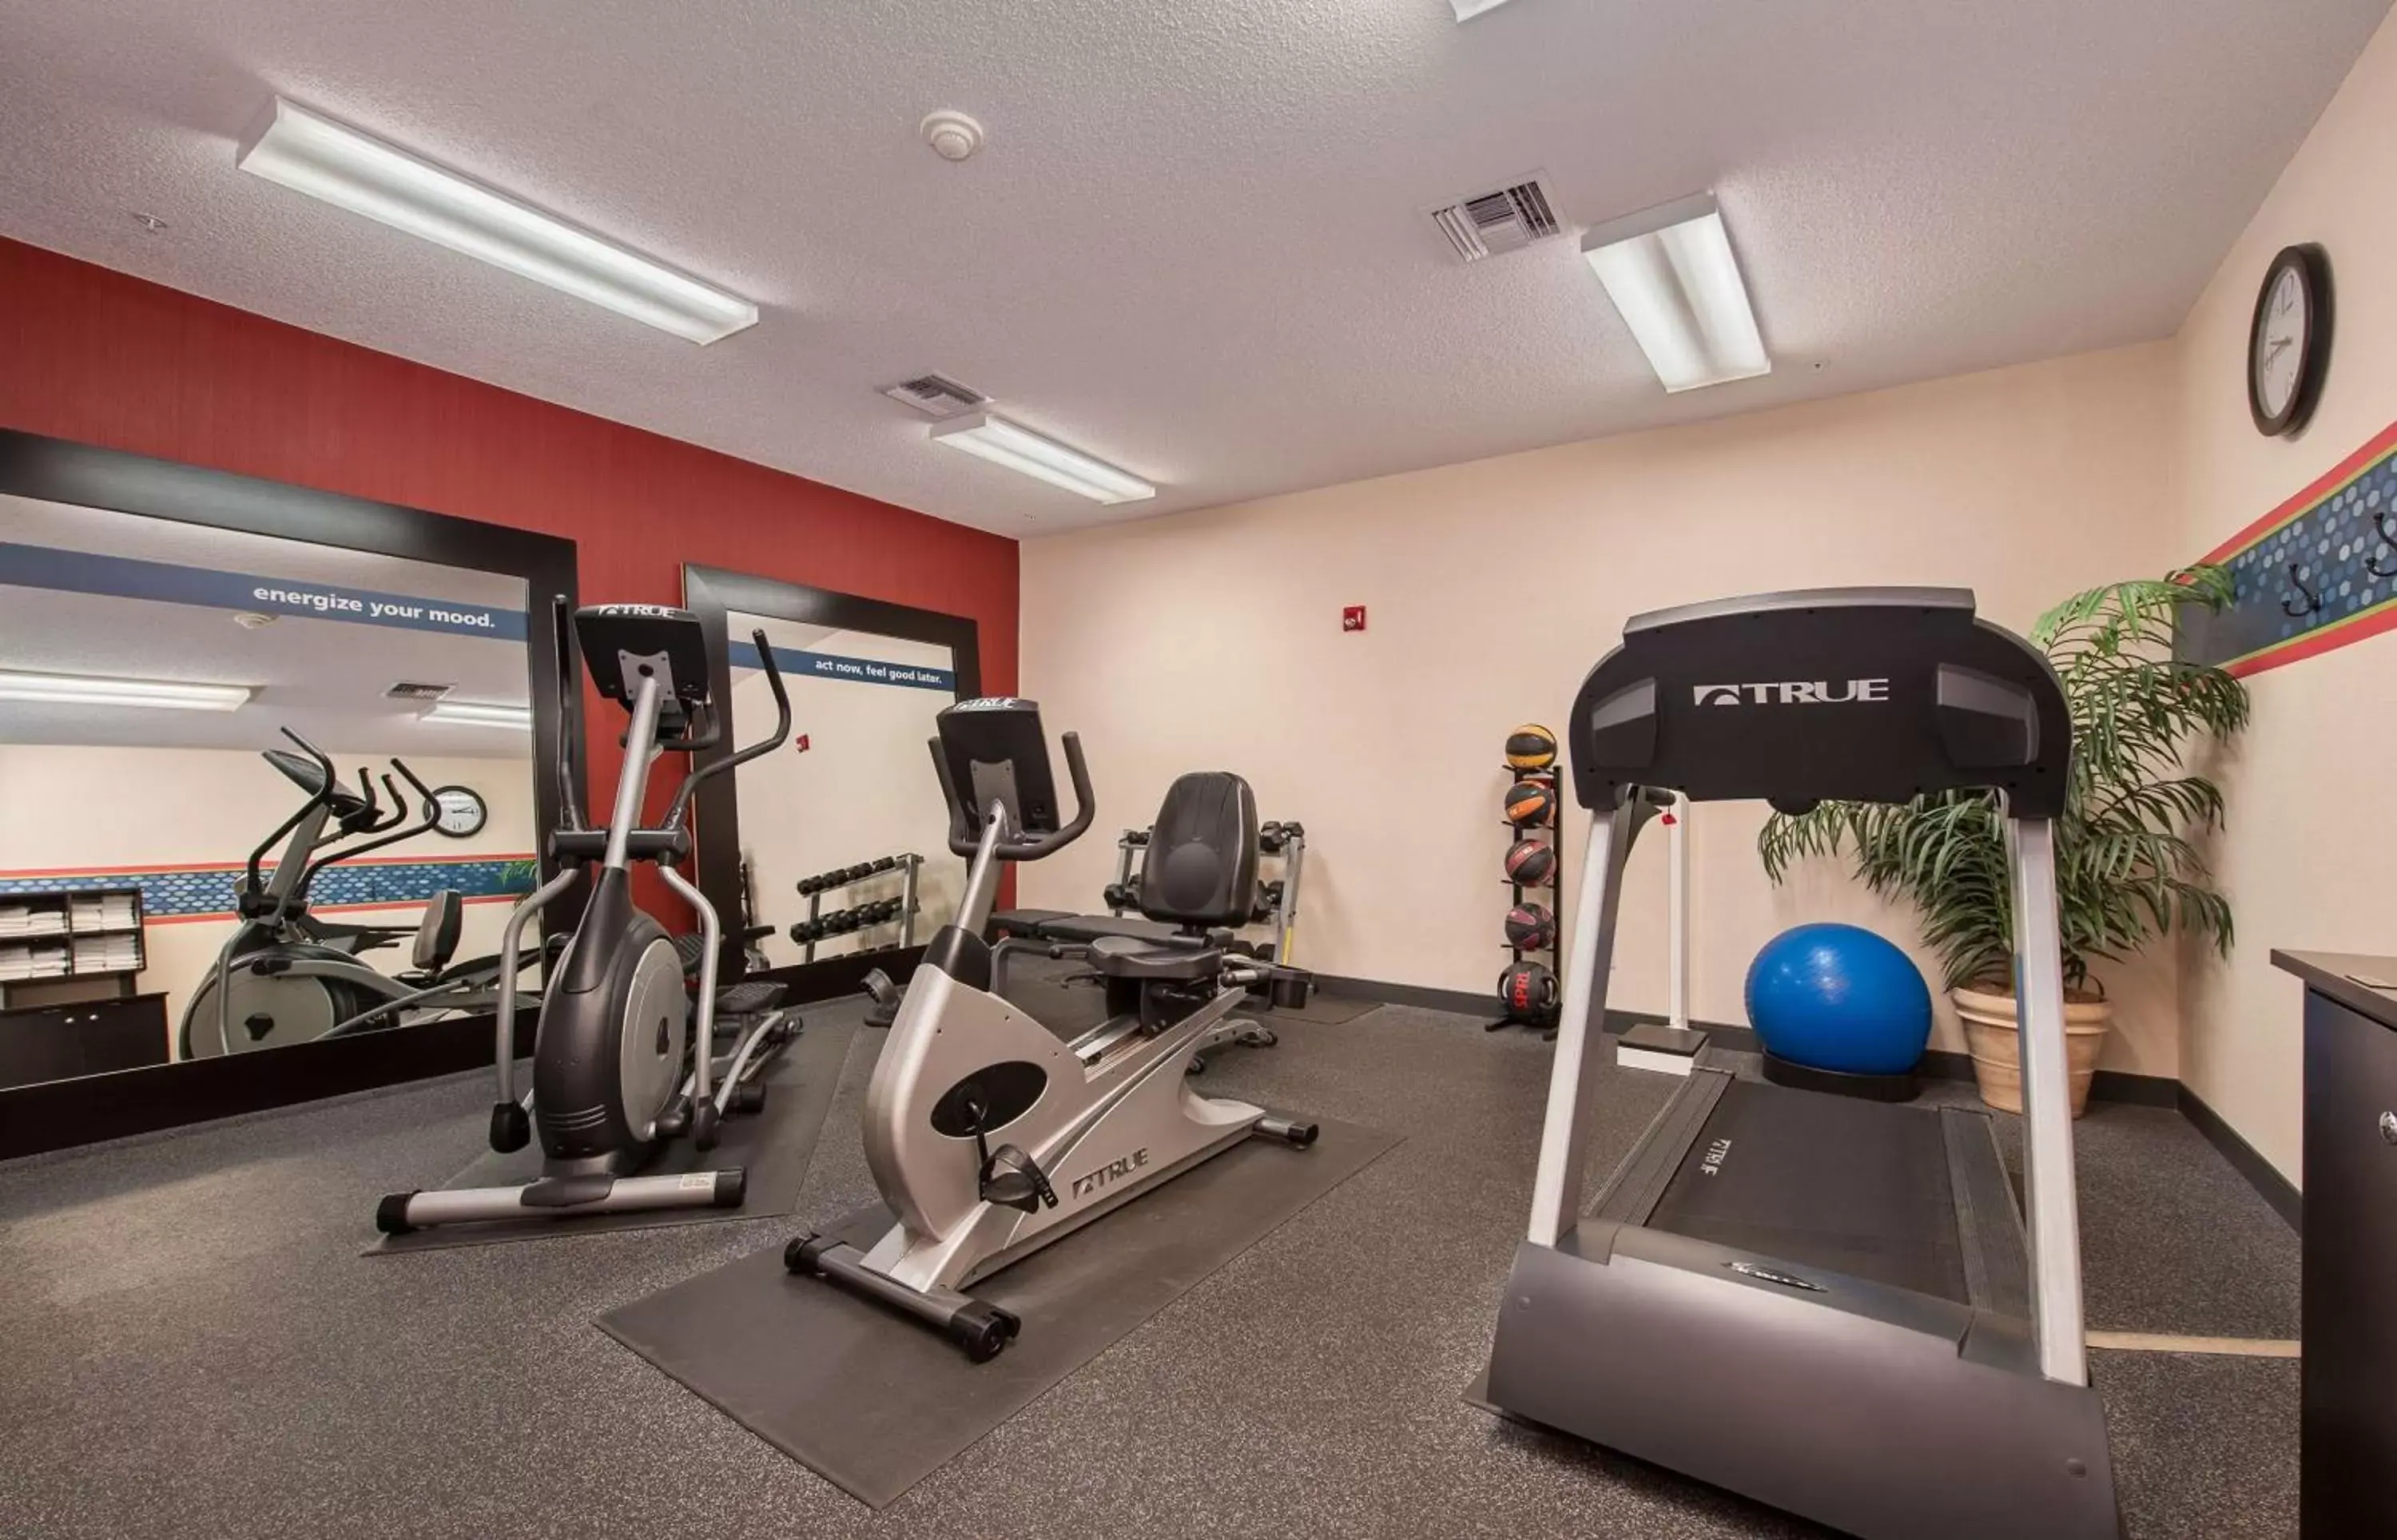 Fitness centre/facilities, Fitness Center/Facilities in Hampton Inn Niceville-Elgin Air Force Base